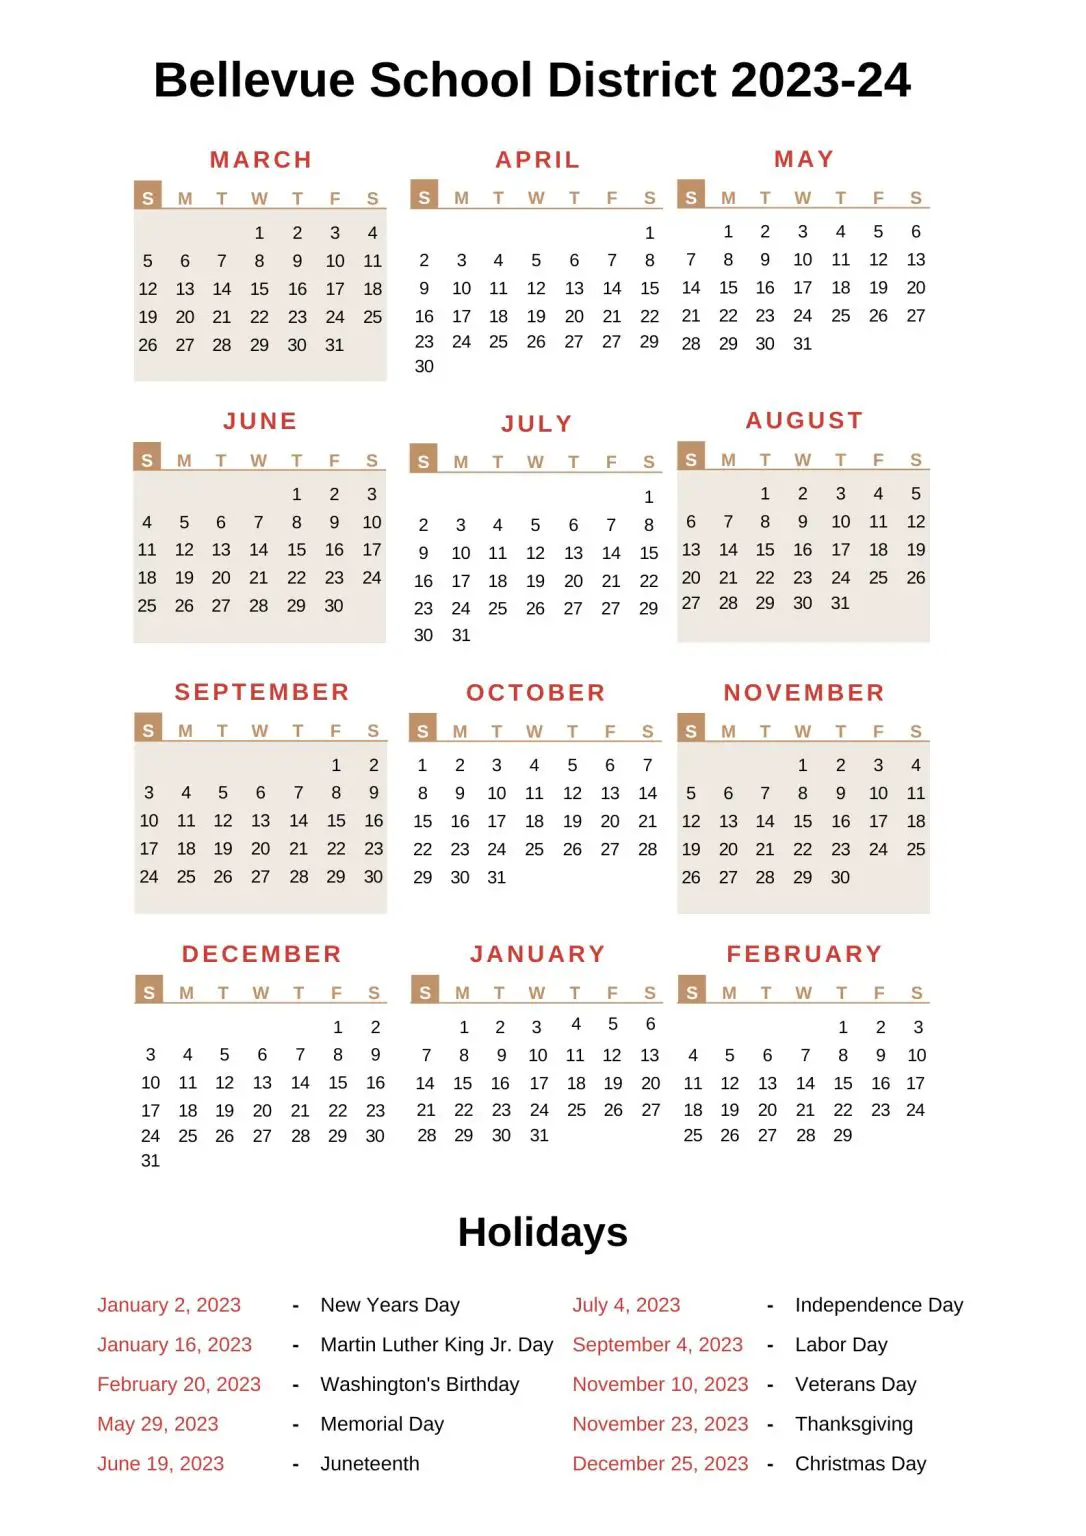 bellevue-school-district-calendar-2023-24-with-holidays